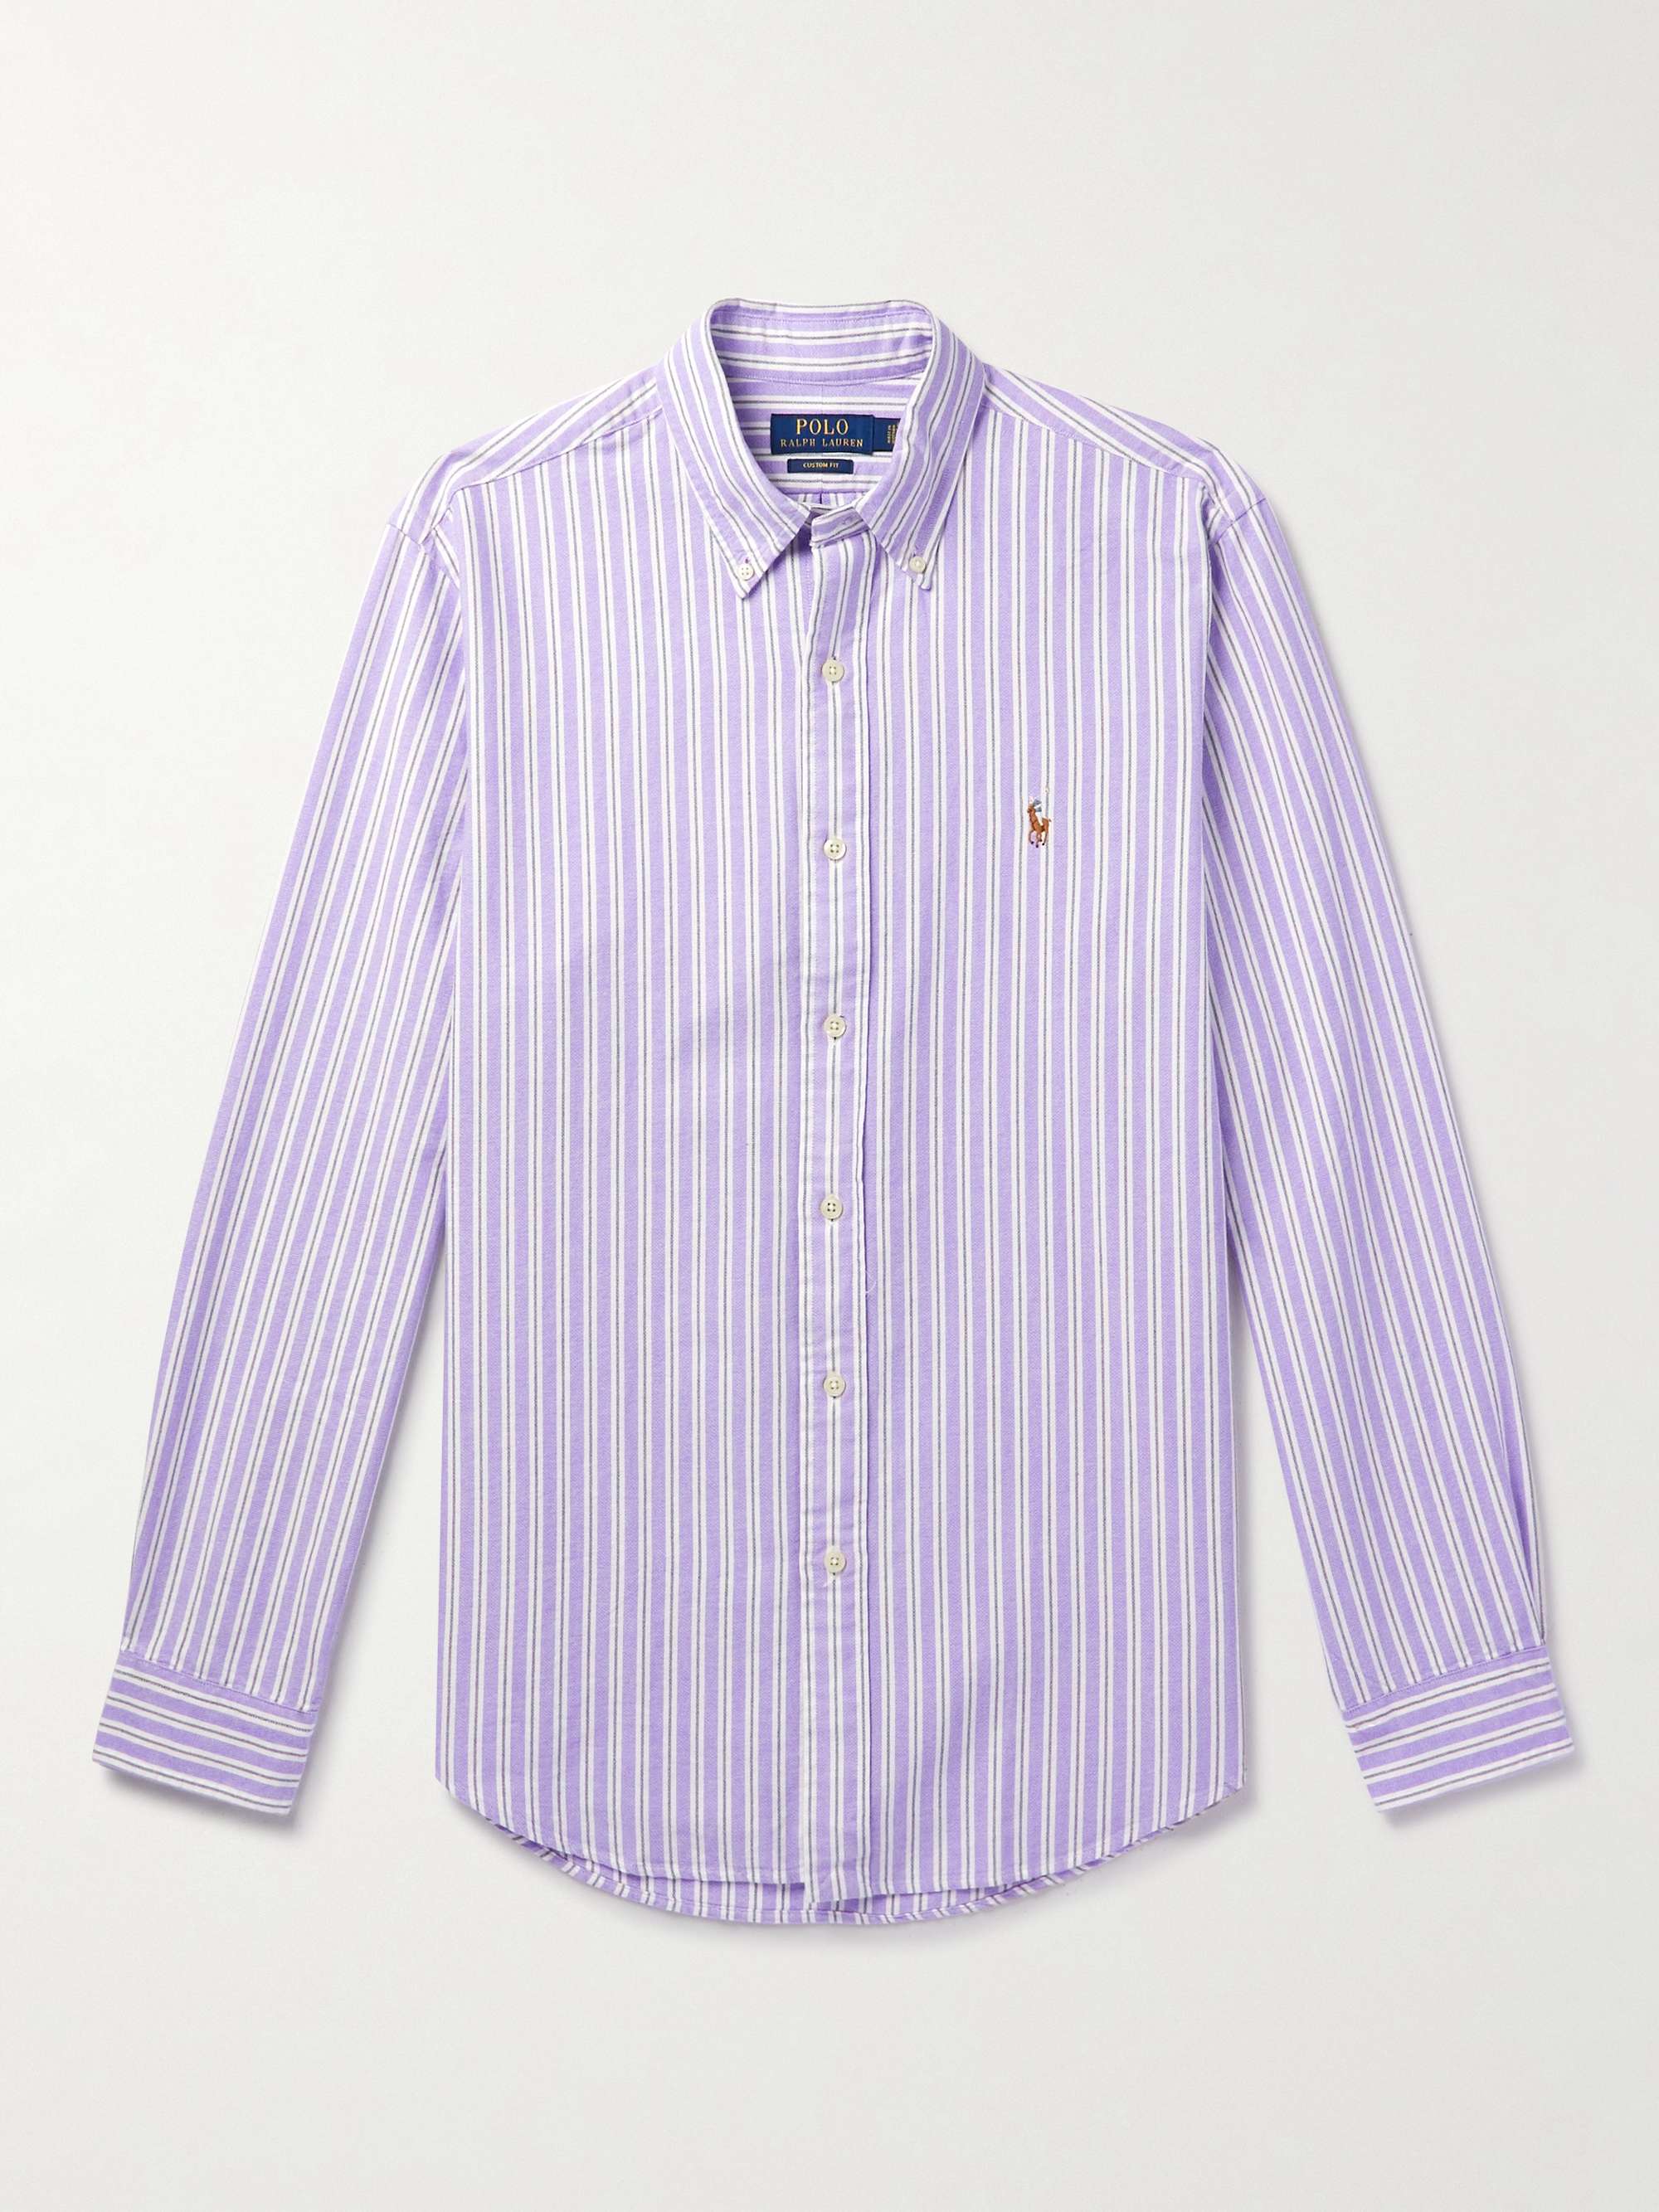 POLO RALPH LAUREN Button-Down Collar Striped Cotton Oxford Shirt,Lilac